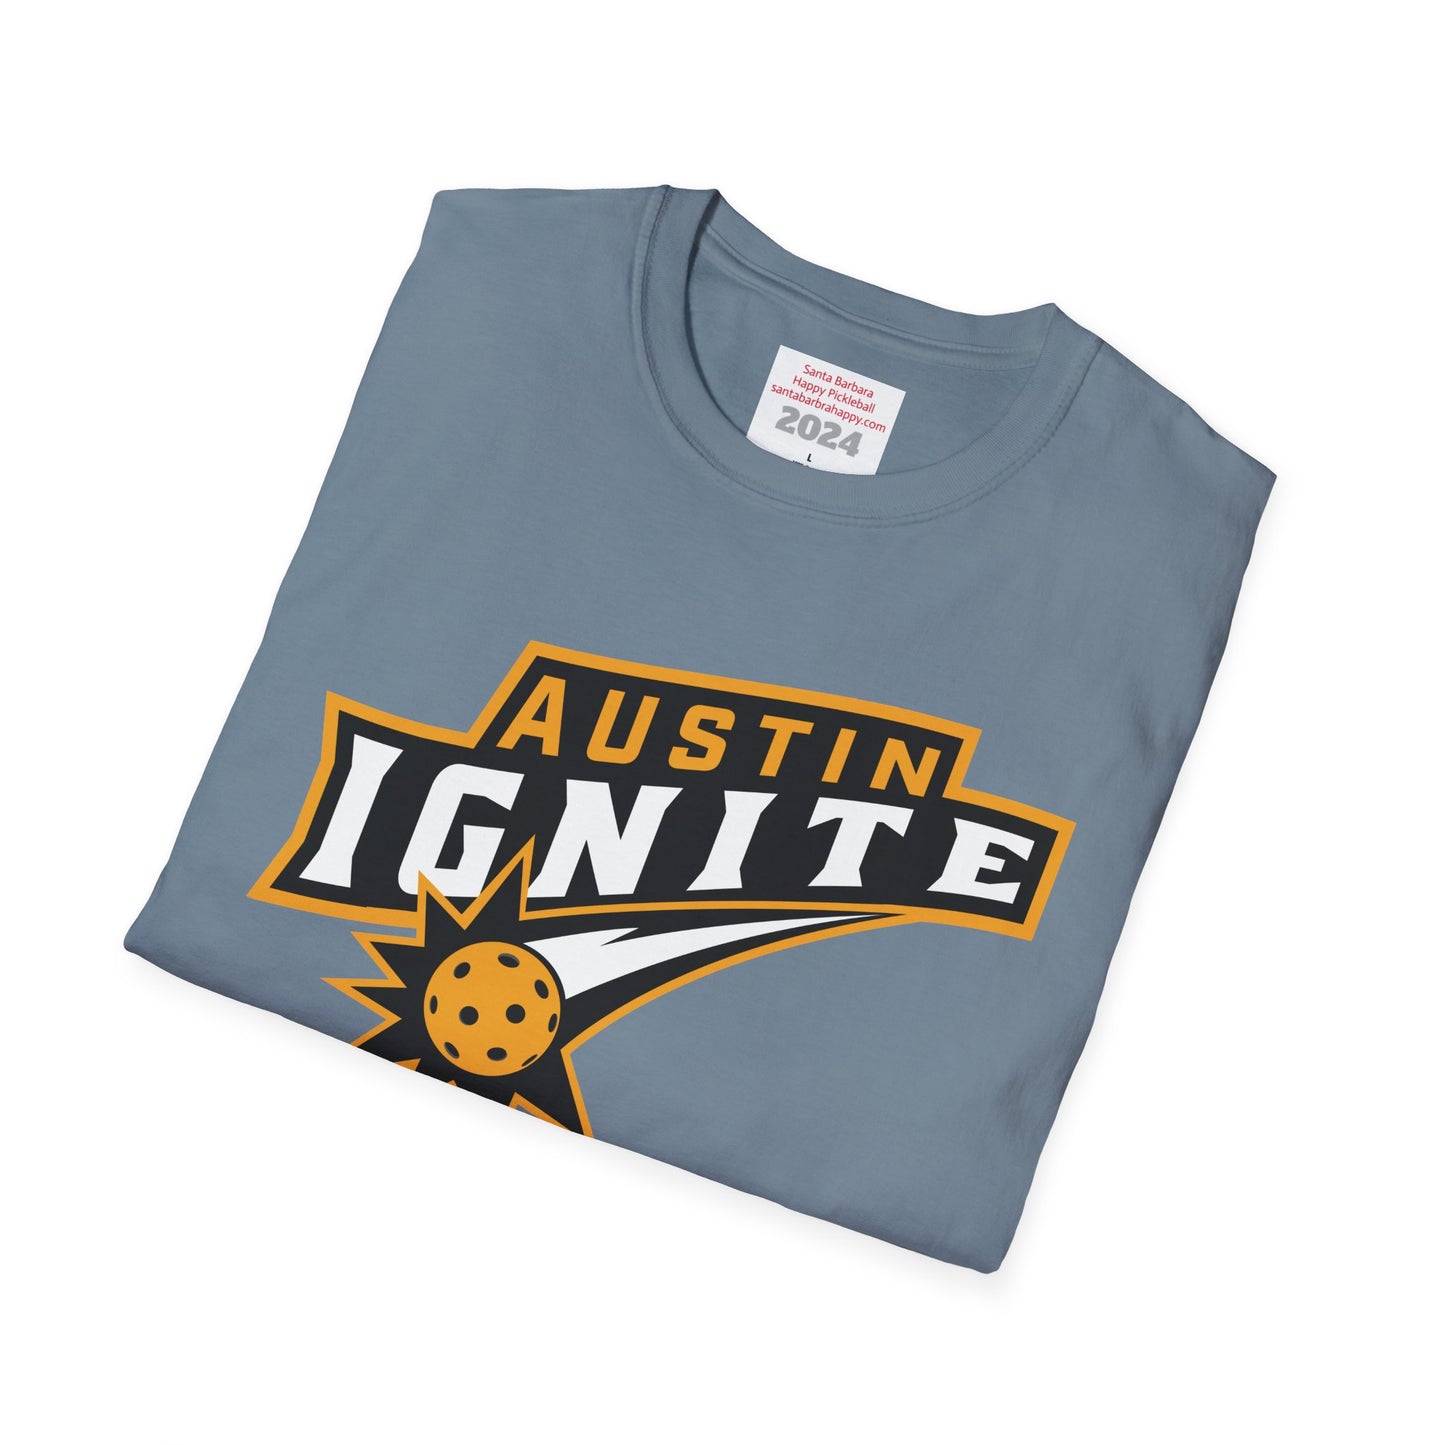 Austin Ignite NPL Team  - Unisex 100% cotton soft style T - can customize back